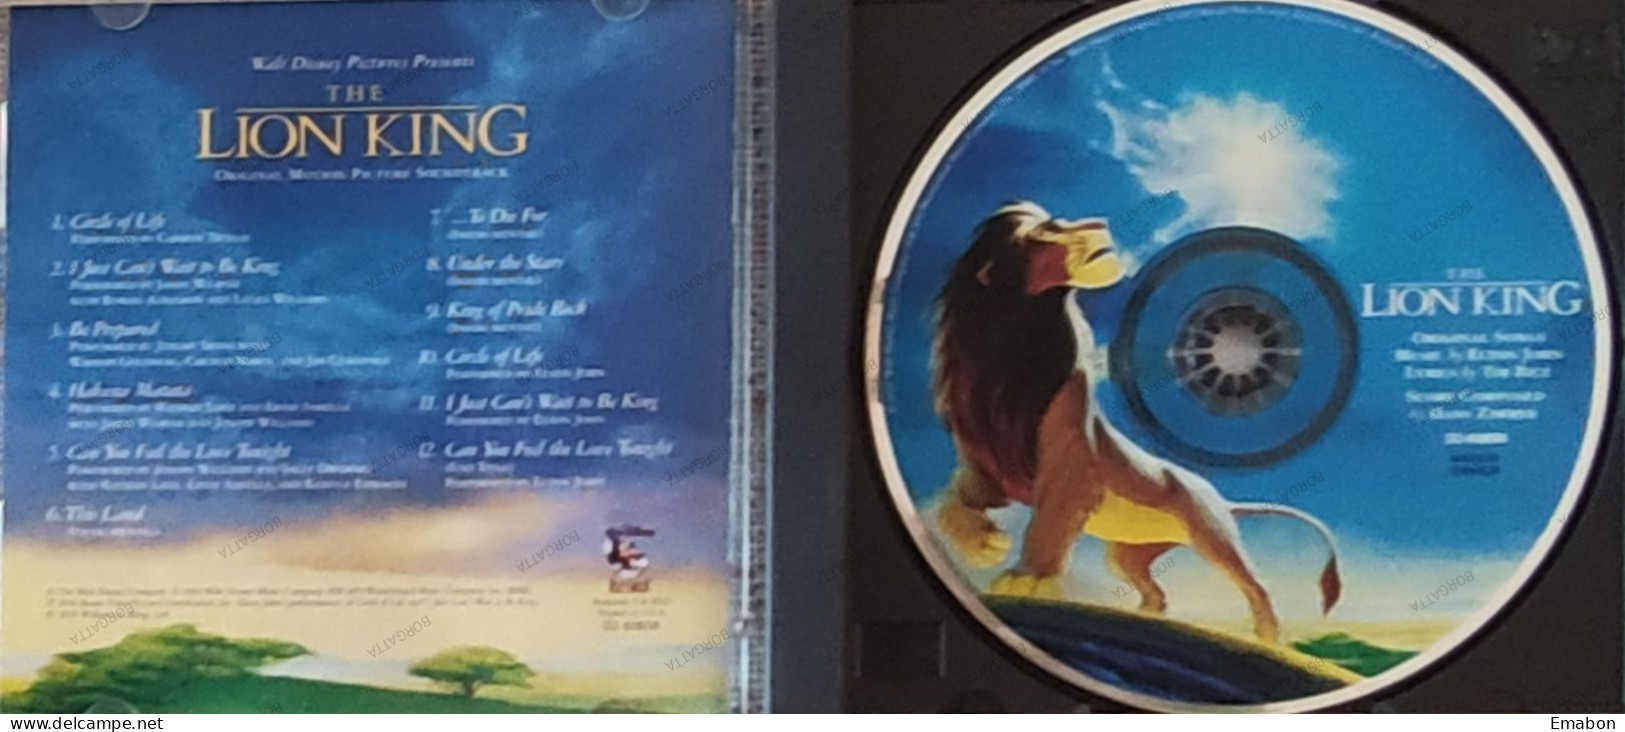 BORGATTA - FILM MUSIC - Cd ELTON JOHN - THE LION KING - WALRT DISNEY RECORDS 1994 - USATO In Buono Stato - Filmmusik